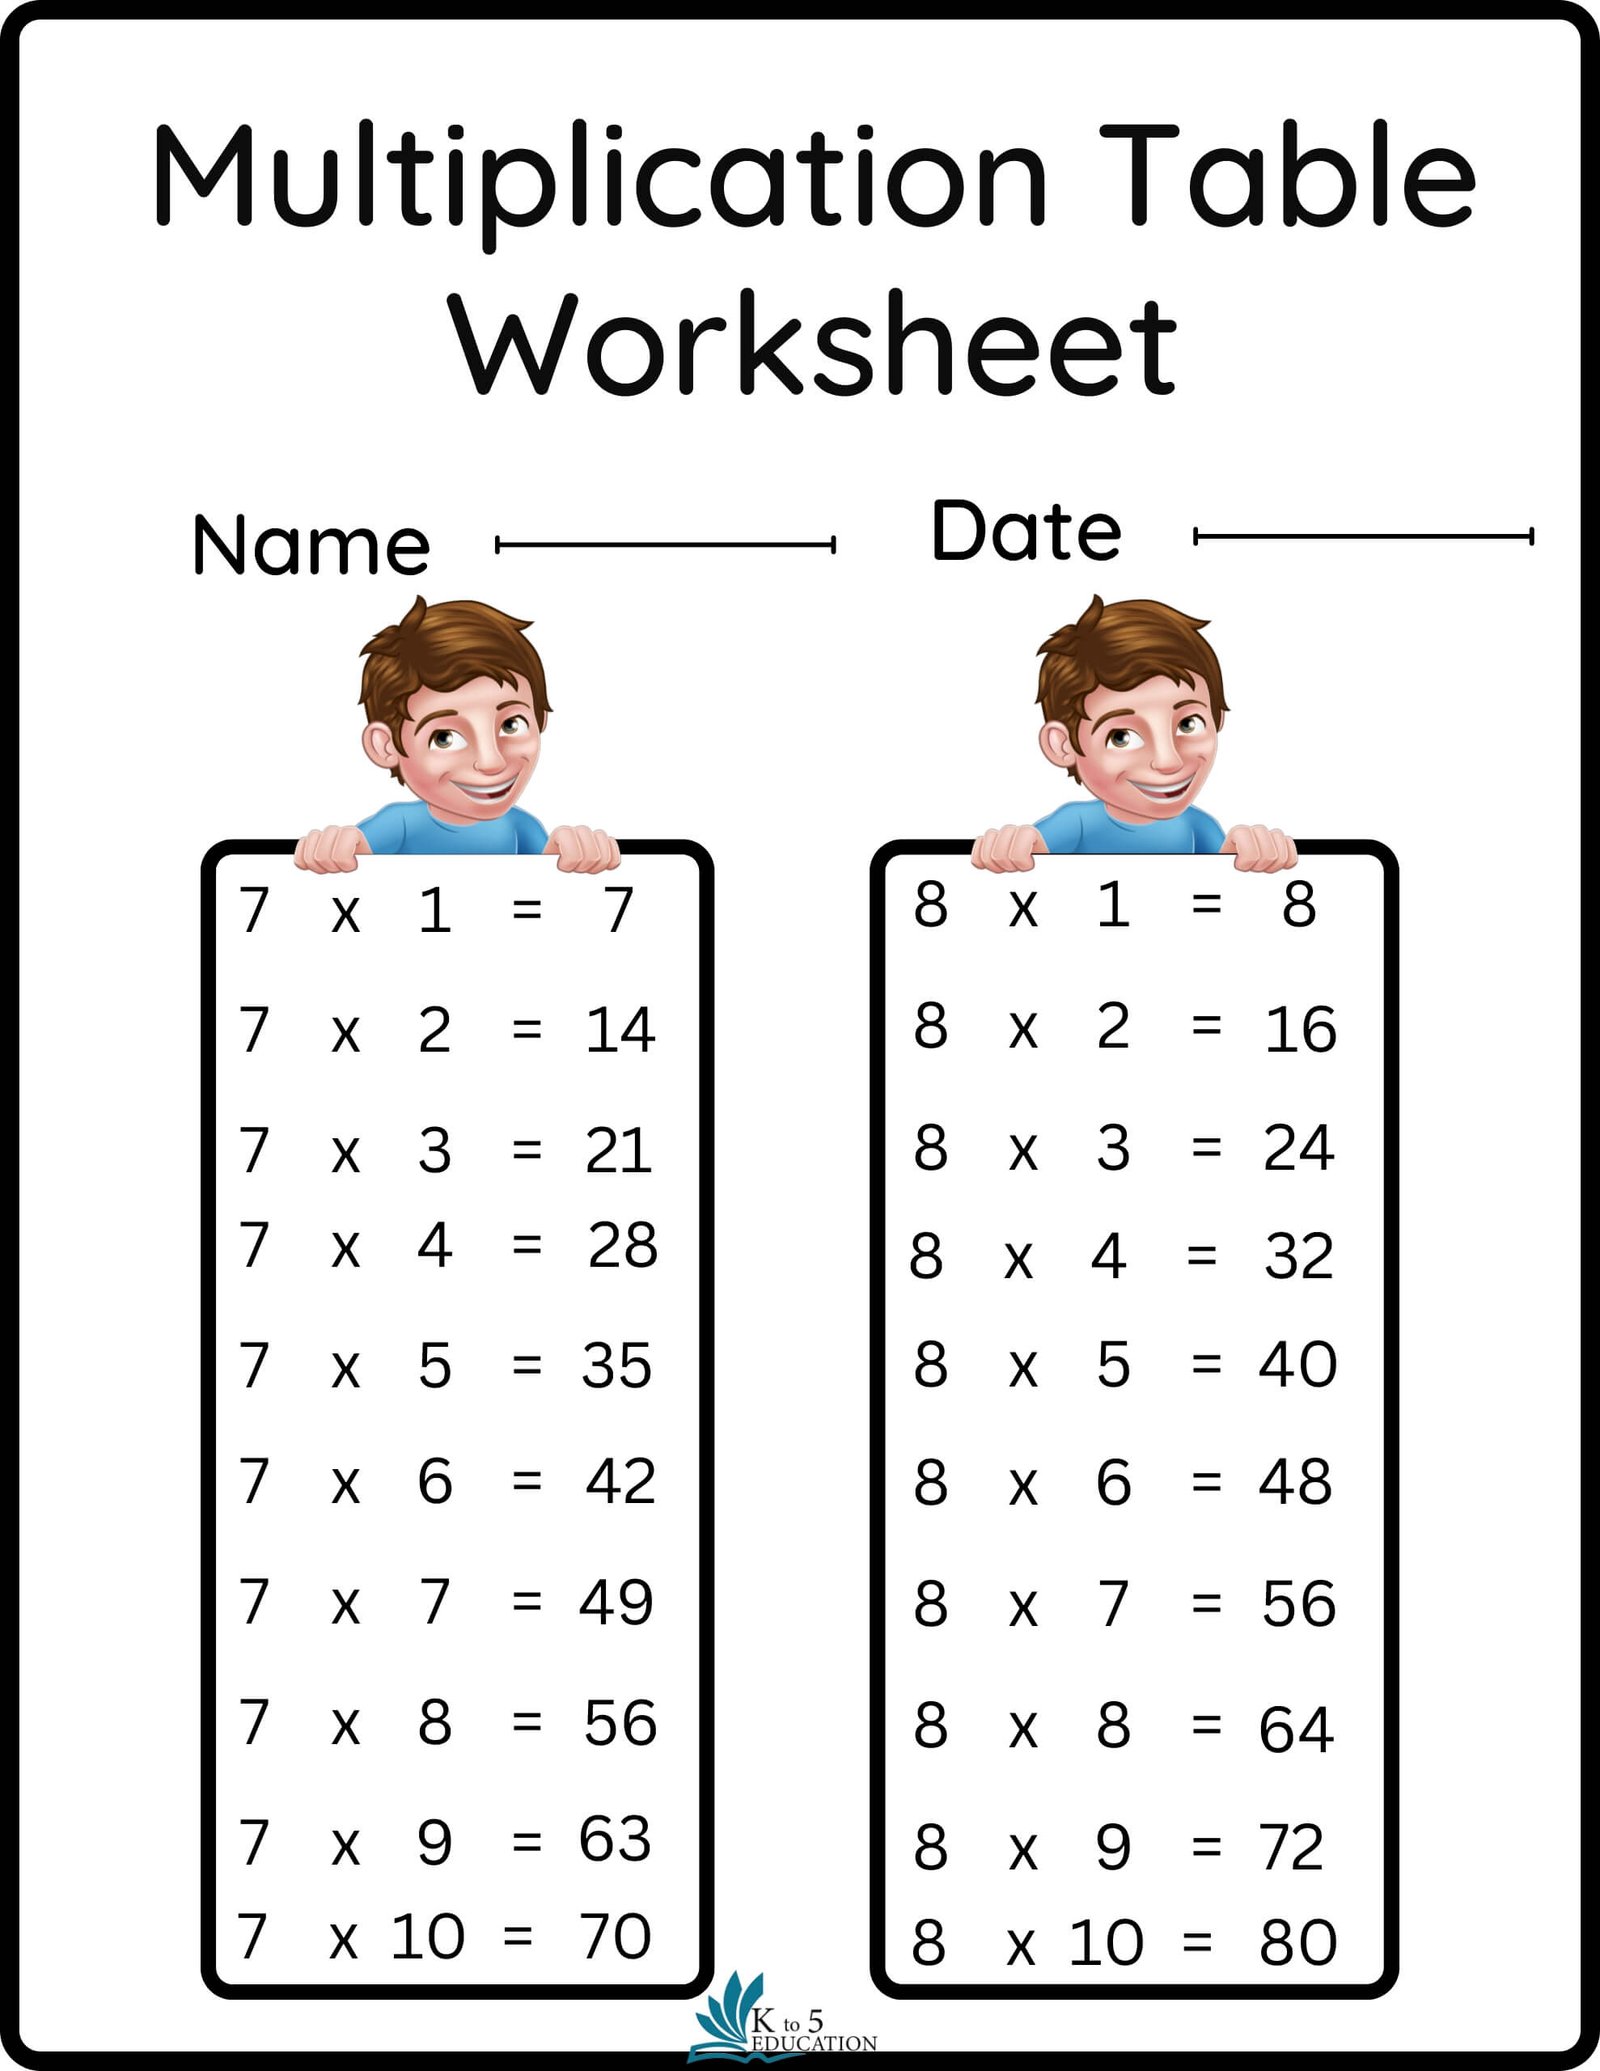 Multiplication Time Table Worksheets